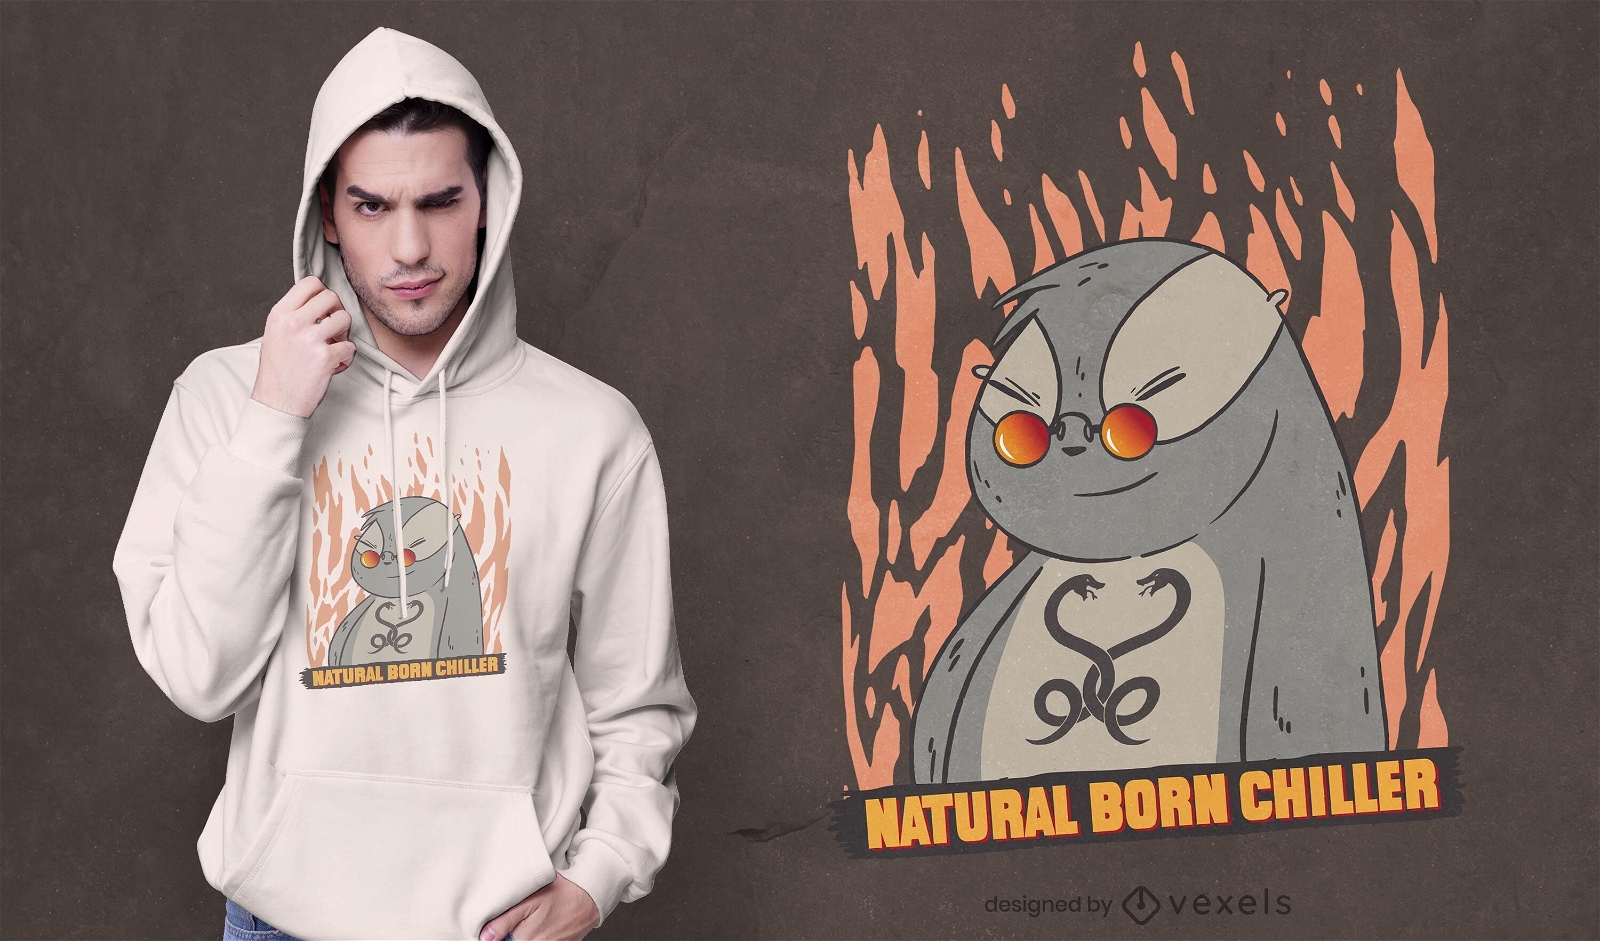 Natural born chiller t-shirt design